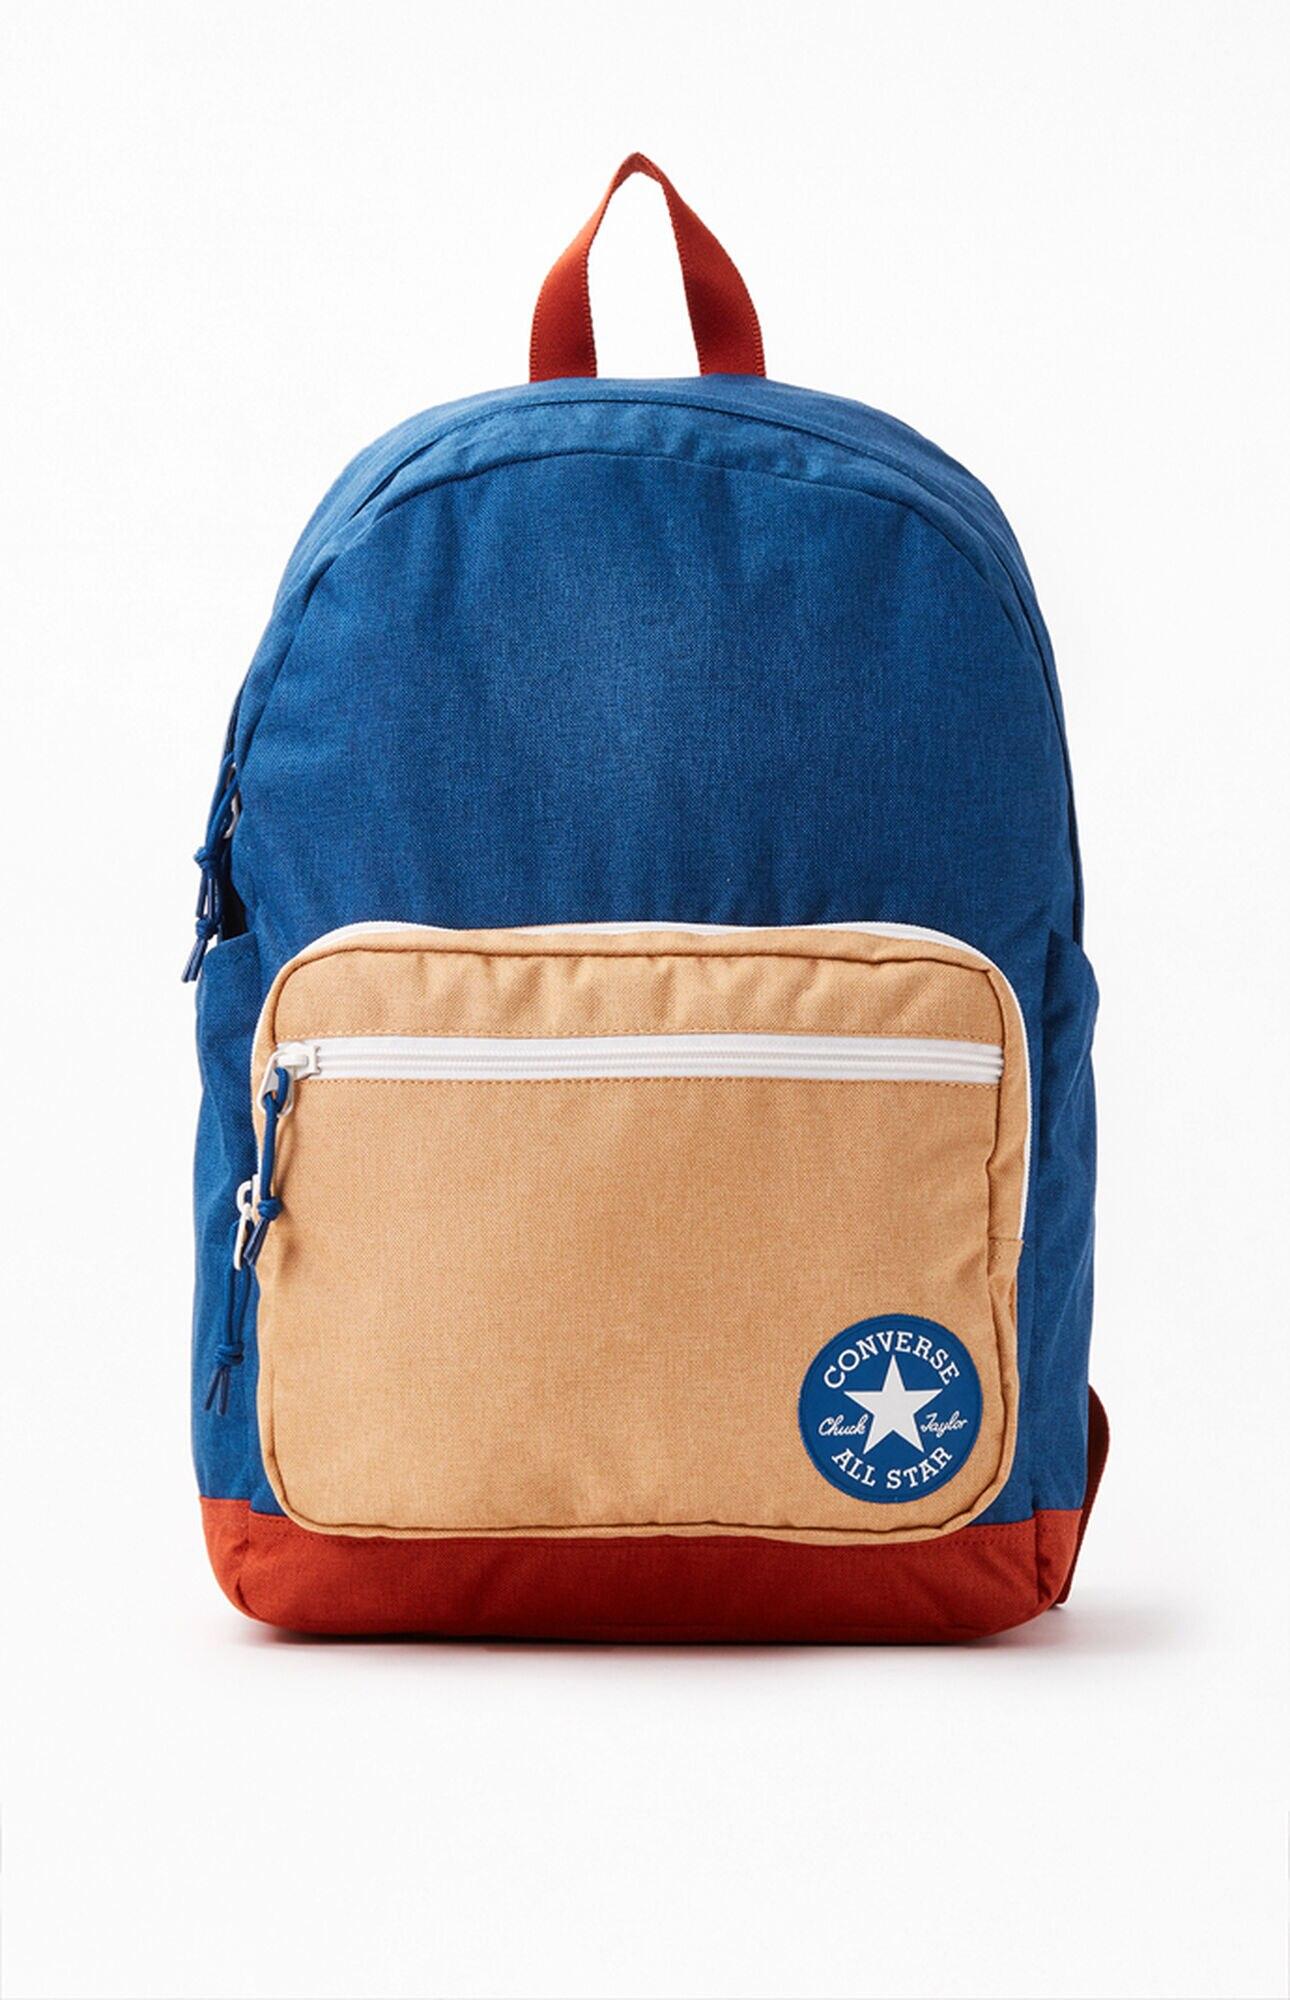 Converse Backpack For School Online - www.illva.com 1695005325